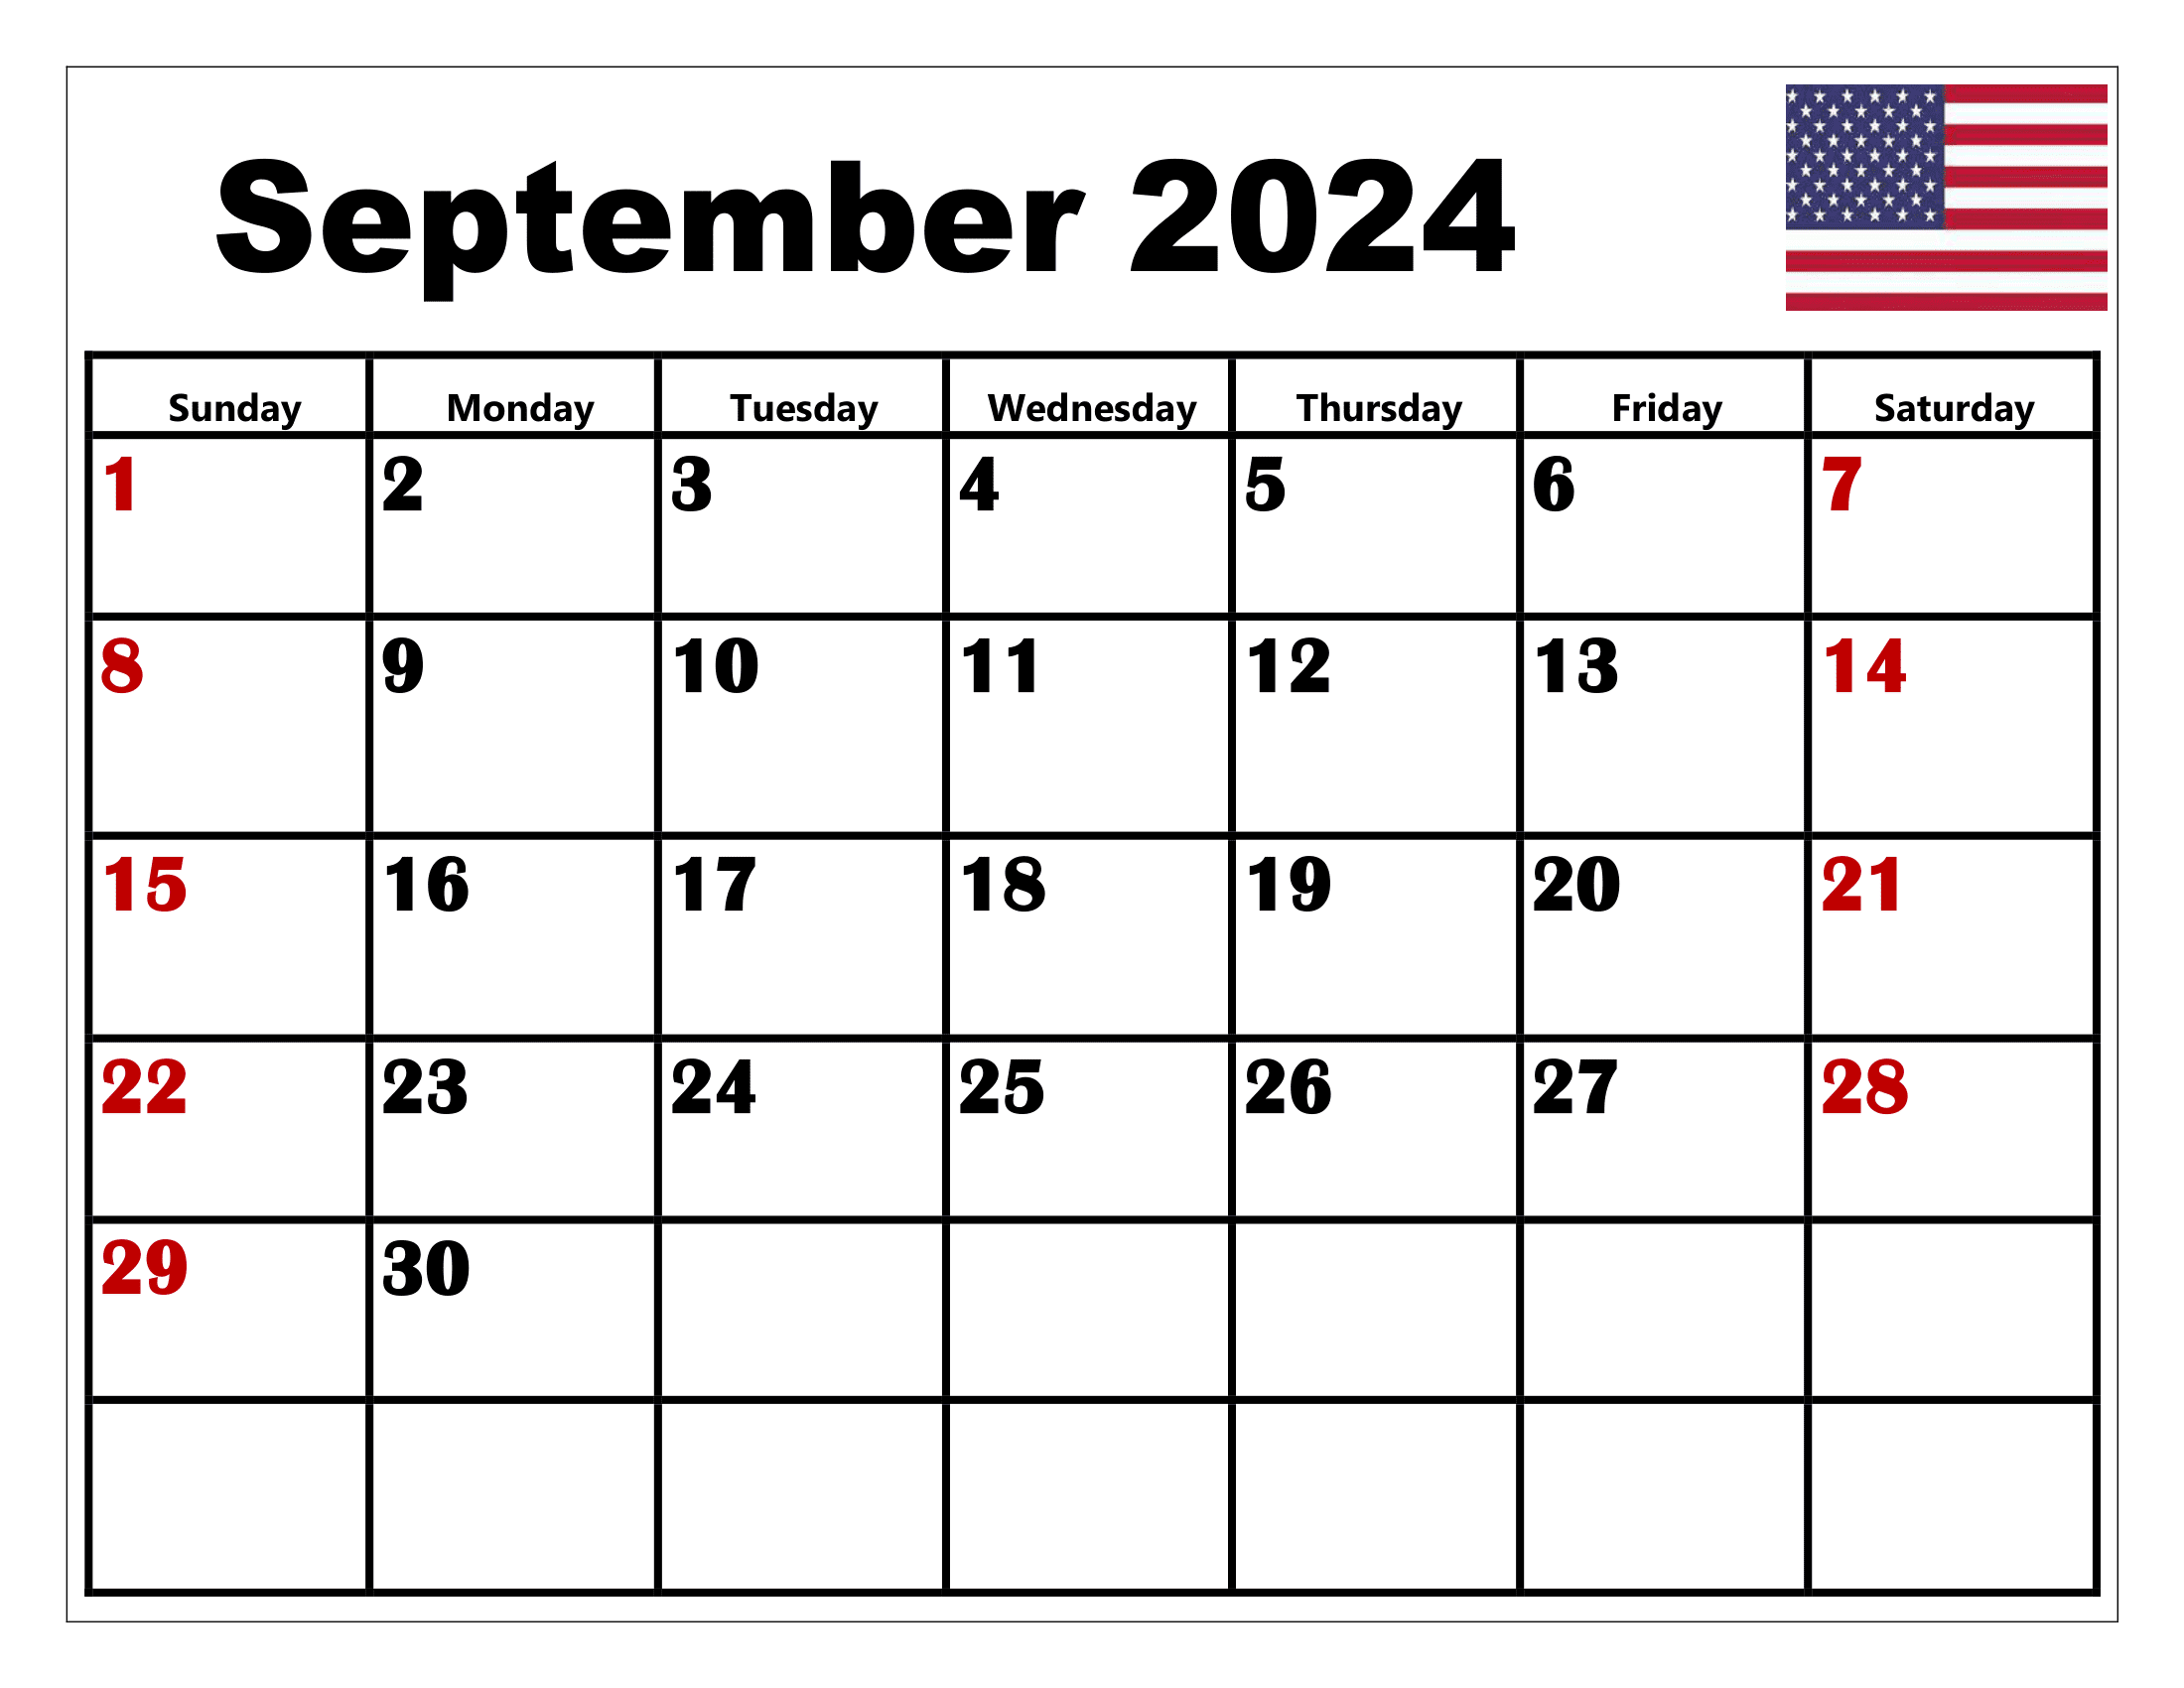 September 2024 Calendar Printable Pdf With Holidays for September 2024 Printable Calendar With Holidays